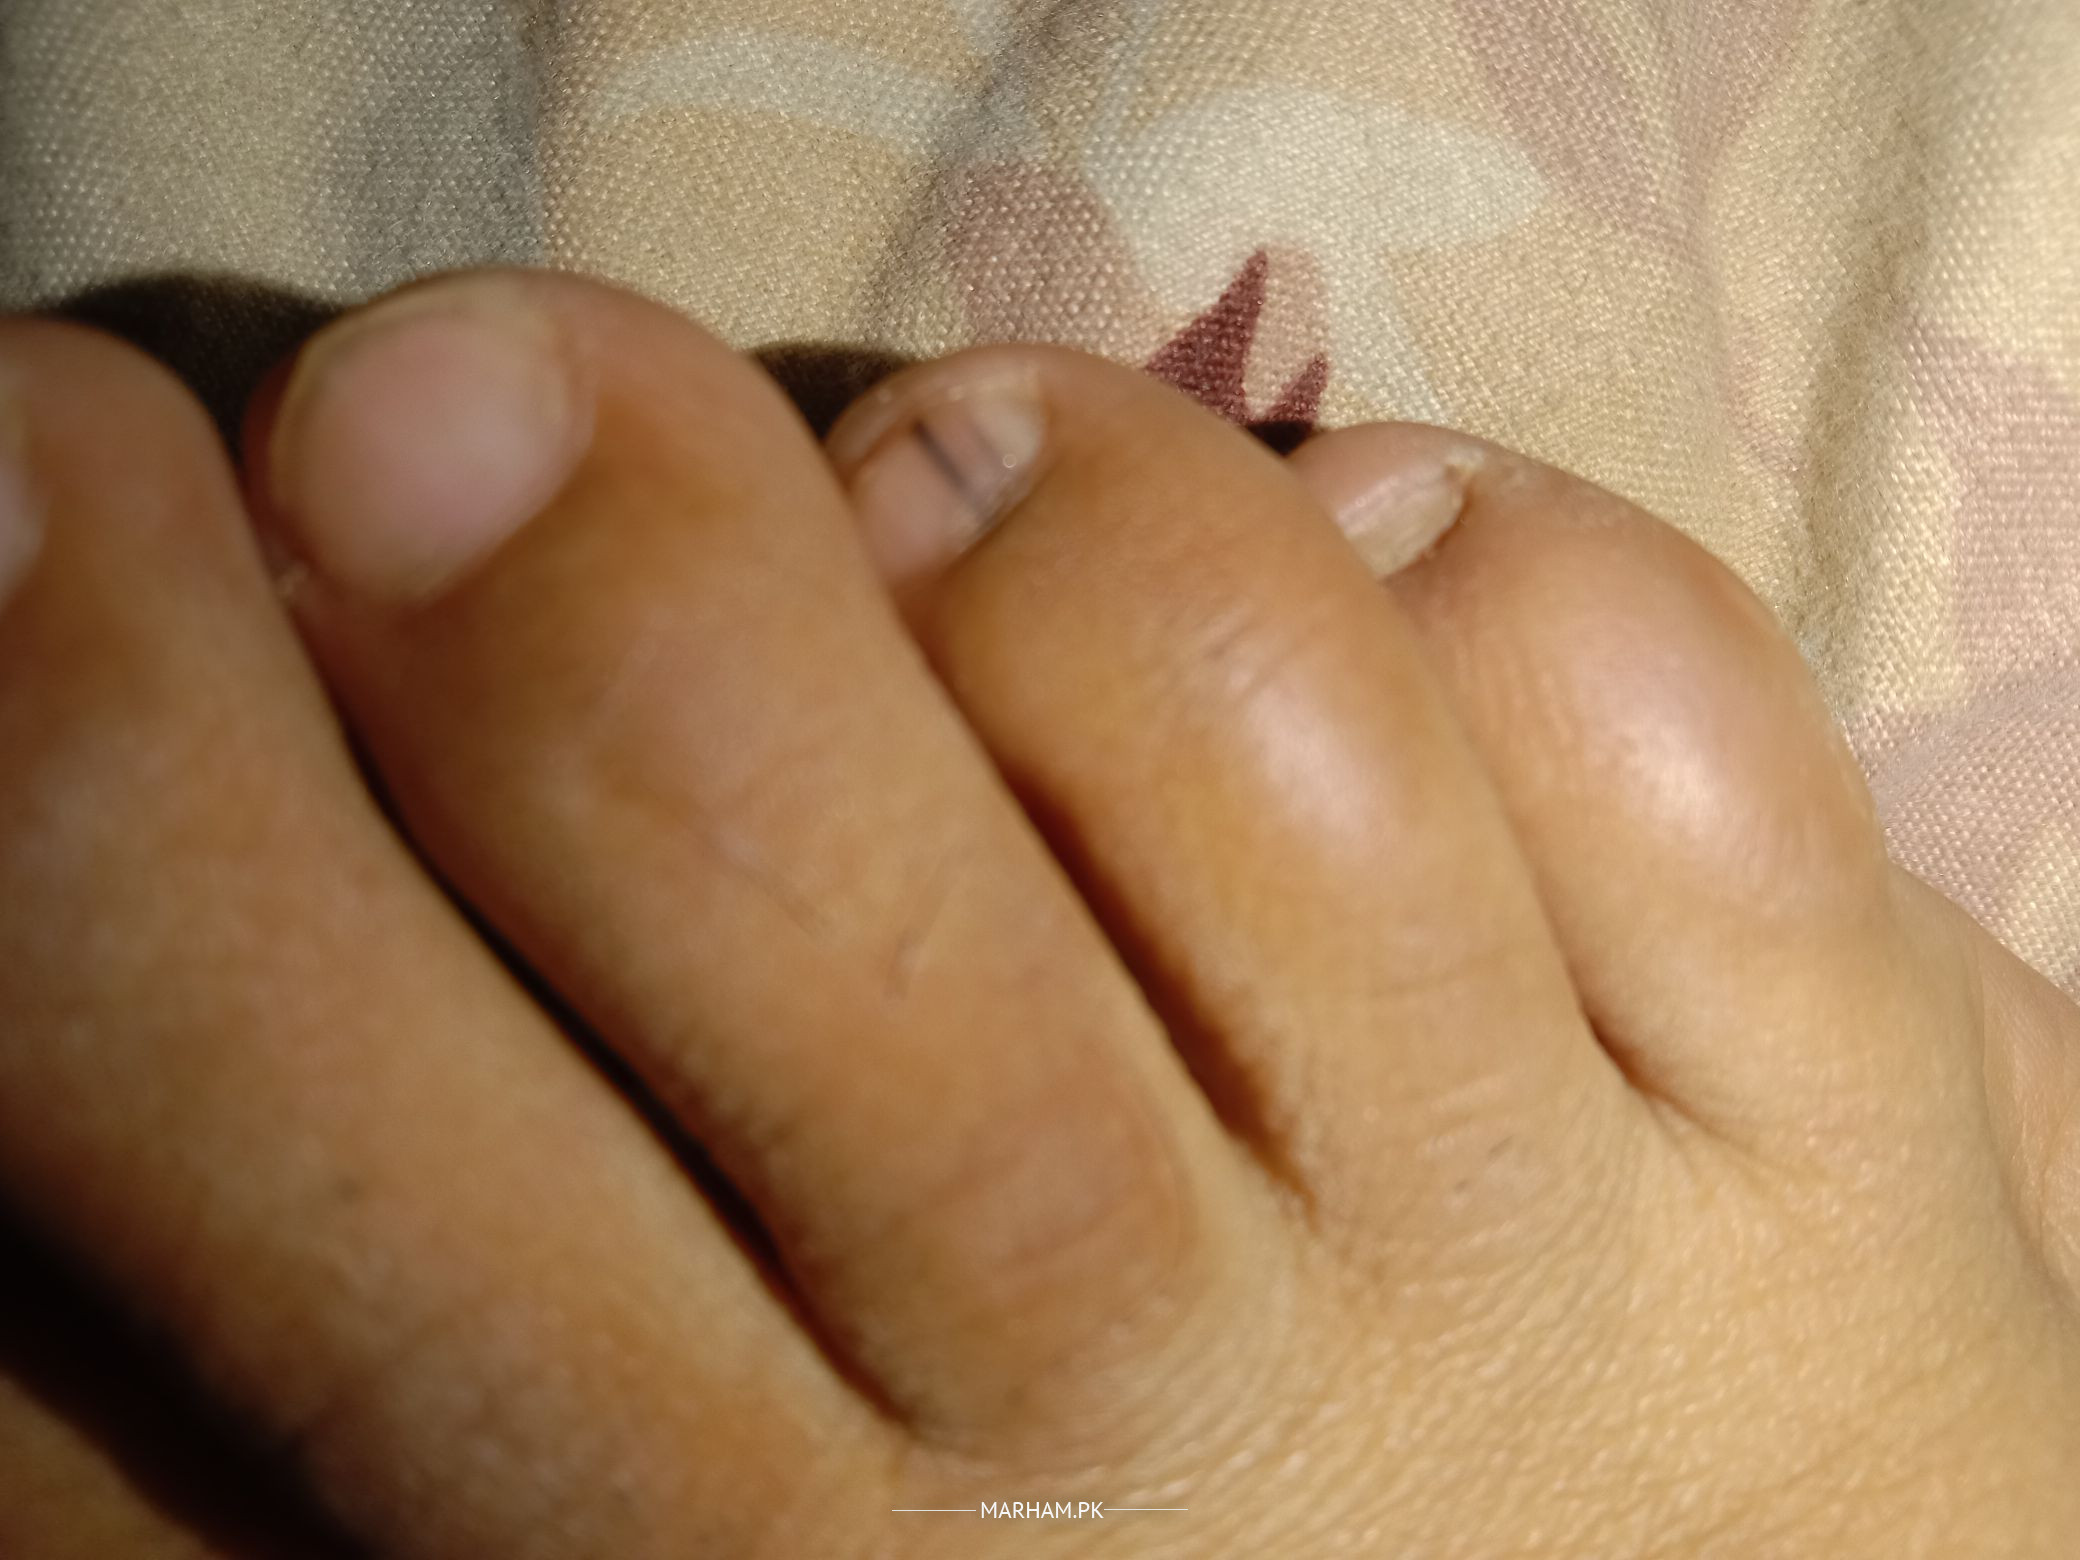 Finger nail streak: Symptom of skin cancer Subungual melanoma | news.com.au  — Australia's leading news site